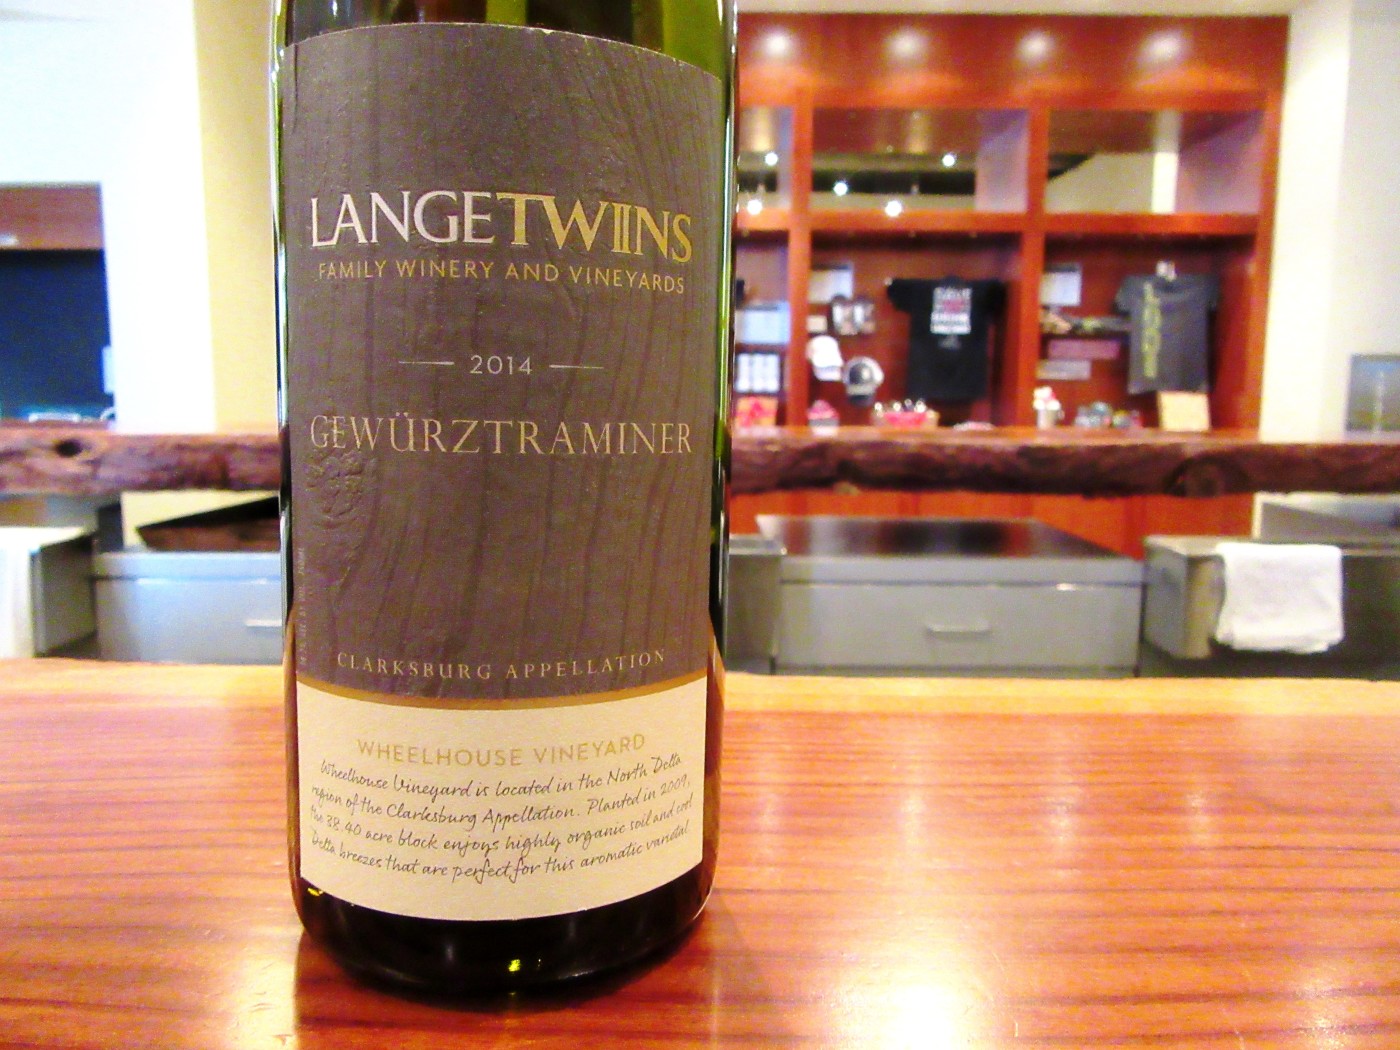 LangeTwins Family Winery and Vineyards, Gewürztraminer 2014, Wheelhouse Vineyard, Clarksburg, California, Wine Casual